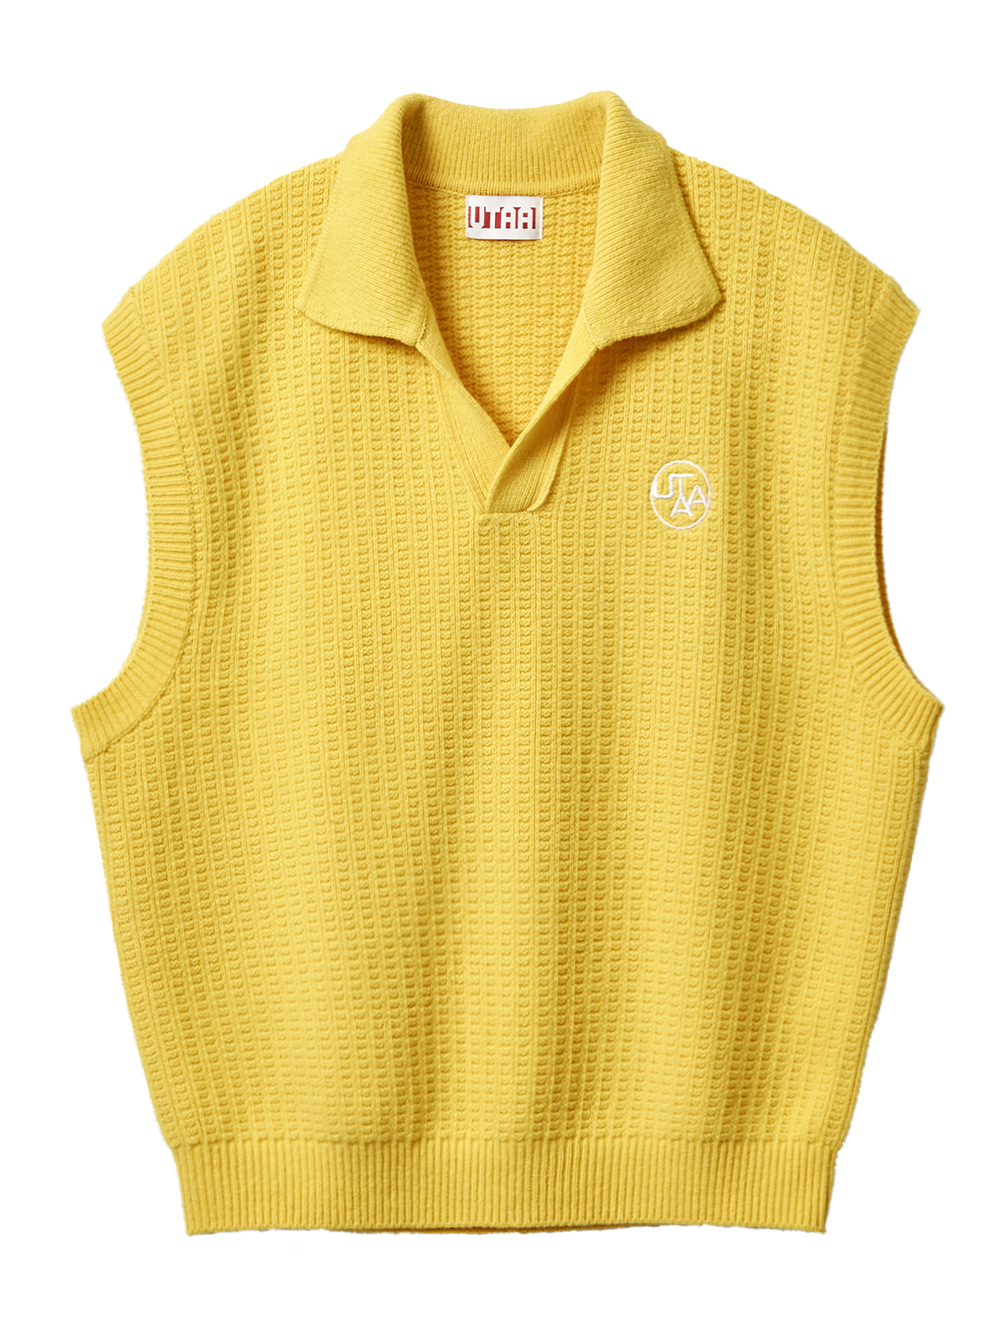 UTAA Gild PK Knit Vest : Yellow (UA4KVF802YE)